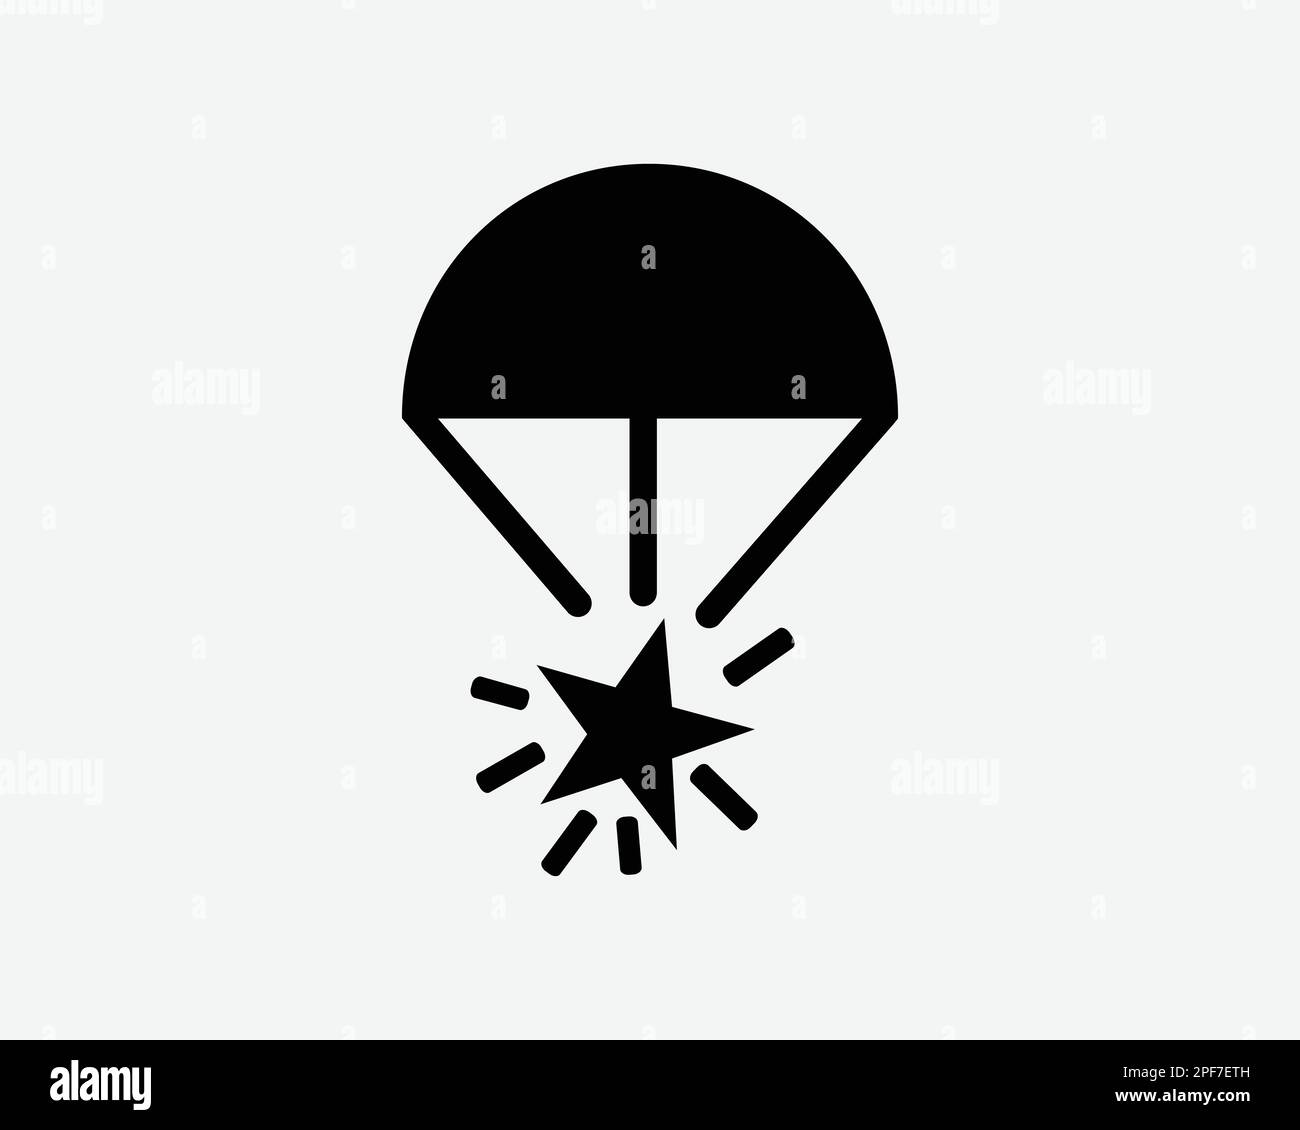 Fallschirm-Flare Star Rakete Notfallrettung Schwarz Weiß Silhouette Symbol Symbol Grafik Clipart Bildmaterial Piktogramm Vektor Stock Vektor